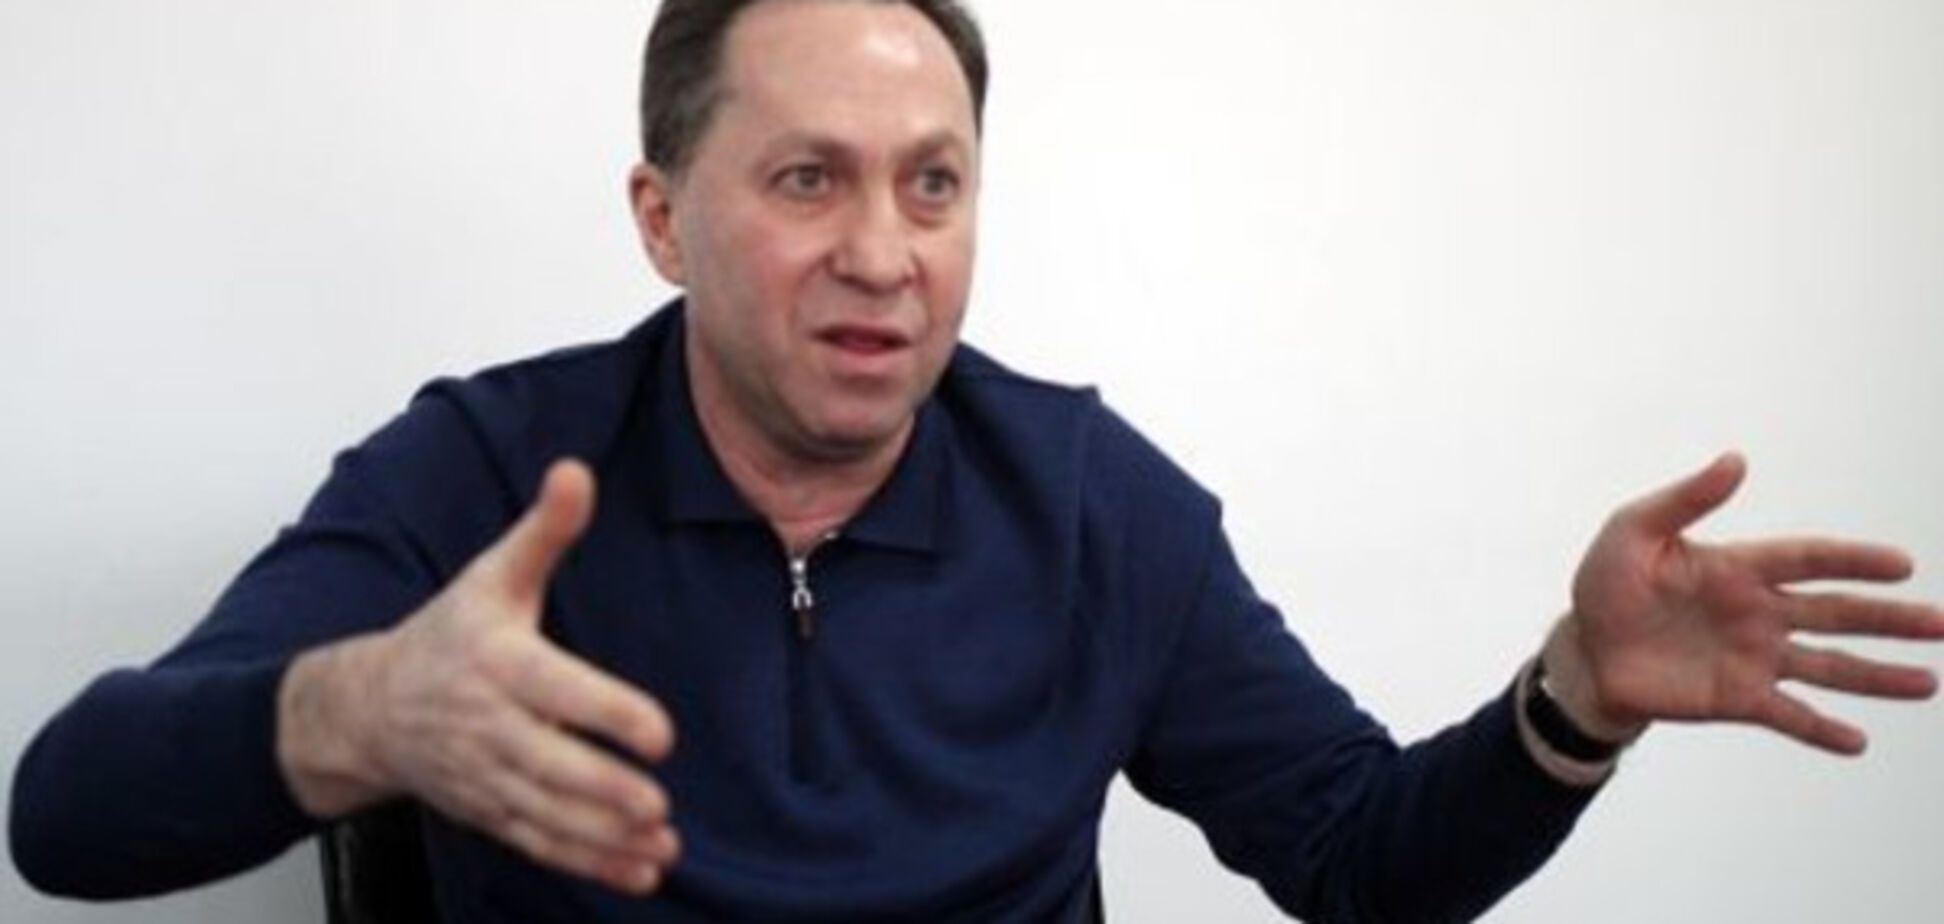 СМИ узнали о связи нардепа Фаермарка с компанией 'Ян де нул Украина'